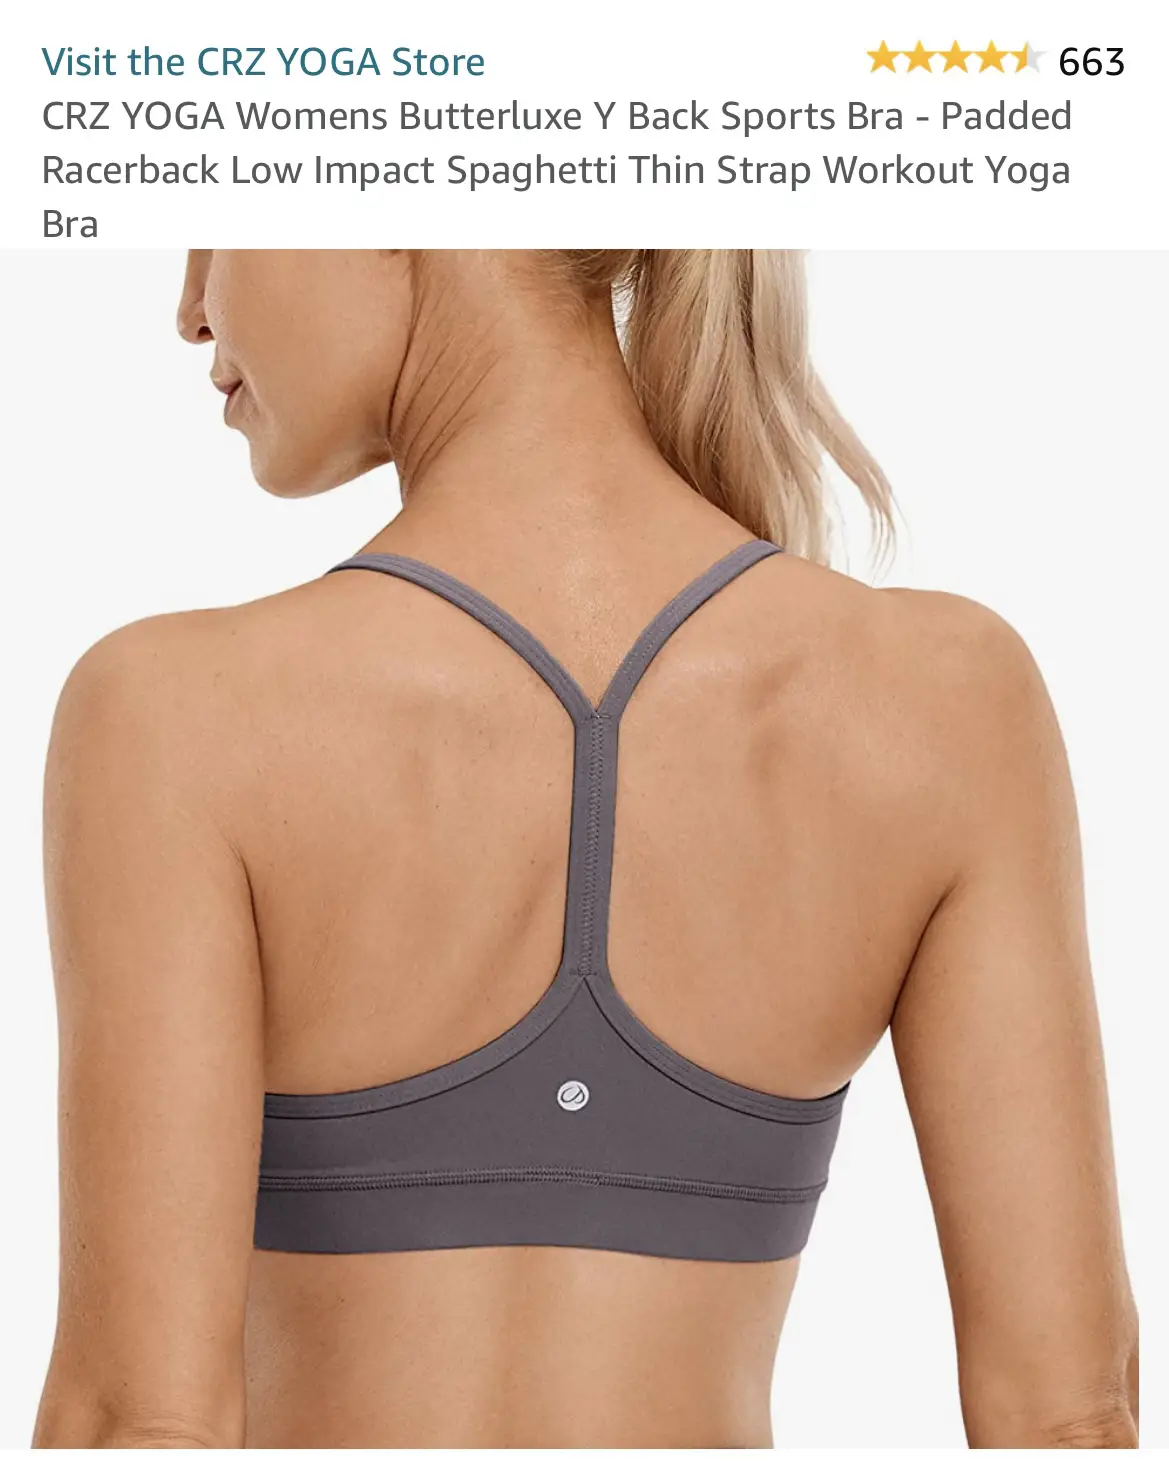 CRZ YOGA Women' Butterluxe Y Back Bra Padded Racerback Low impact Spaghetti  Thin Strap Backless Yoga Bra